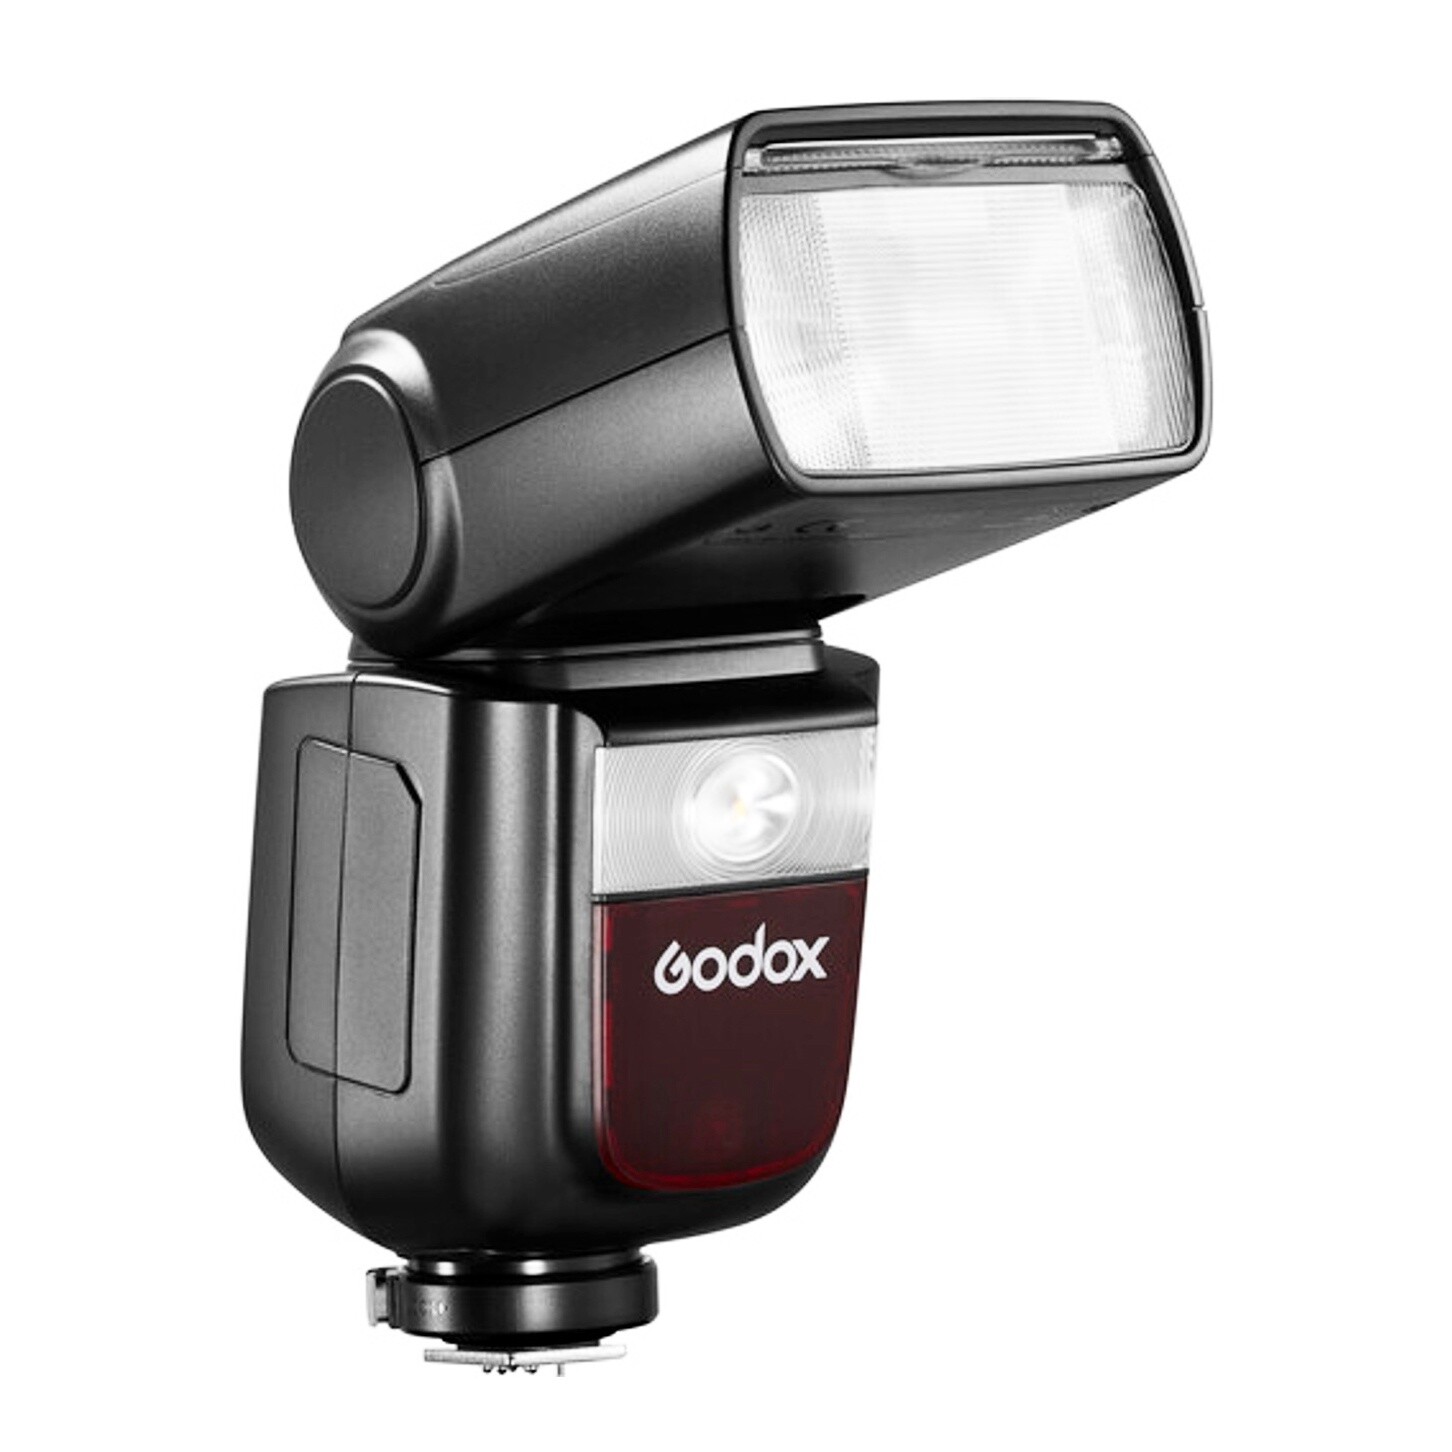 Godox V860III On-Camera Flash (for Nikon)